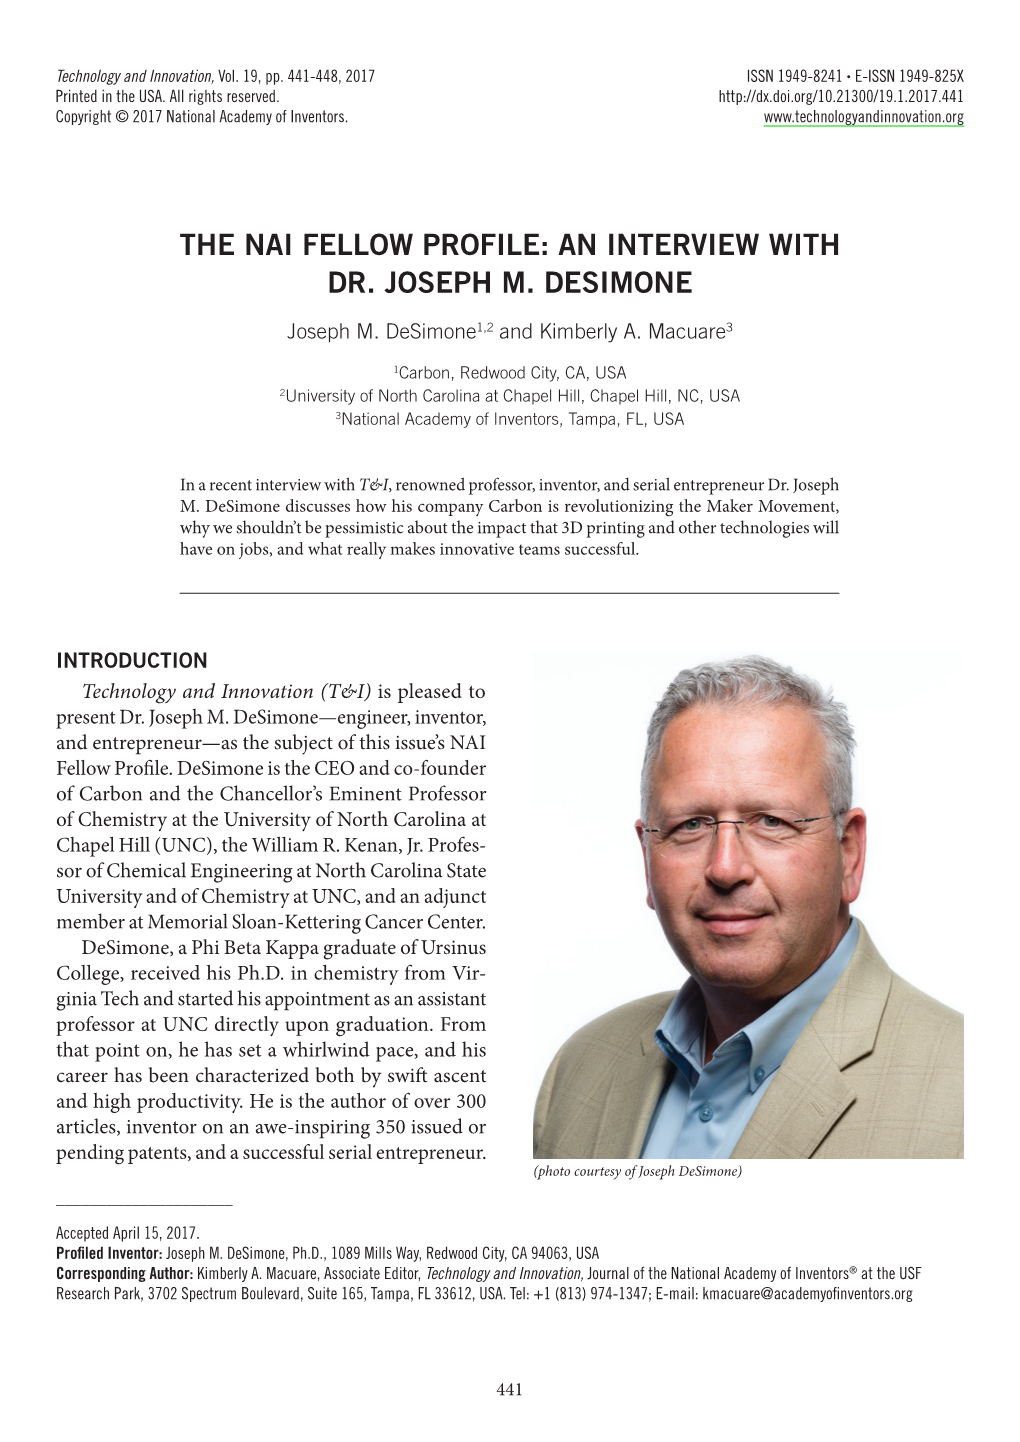 The Nai Fellow Profile: an Interview with Dr. Joseph M. Desimone